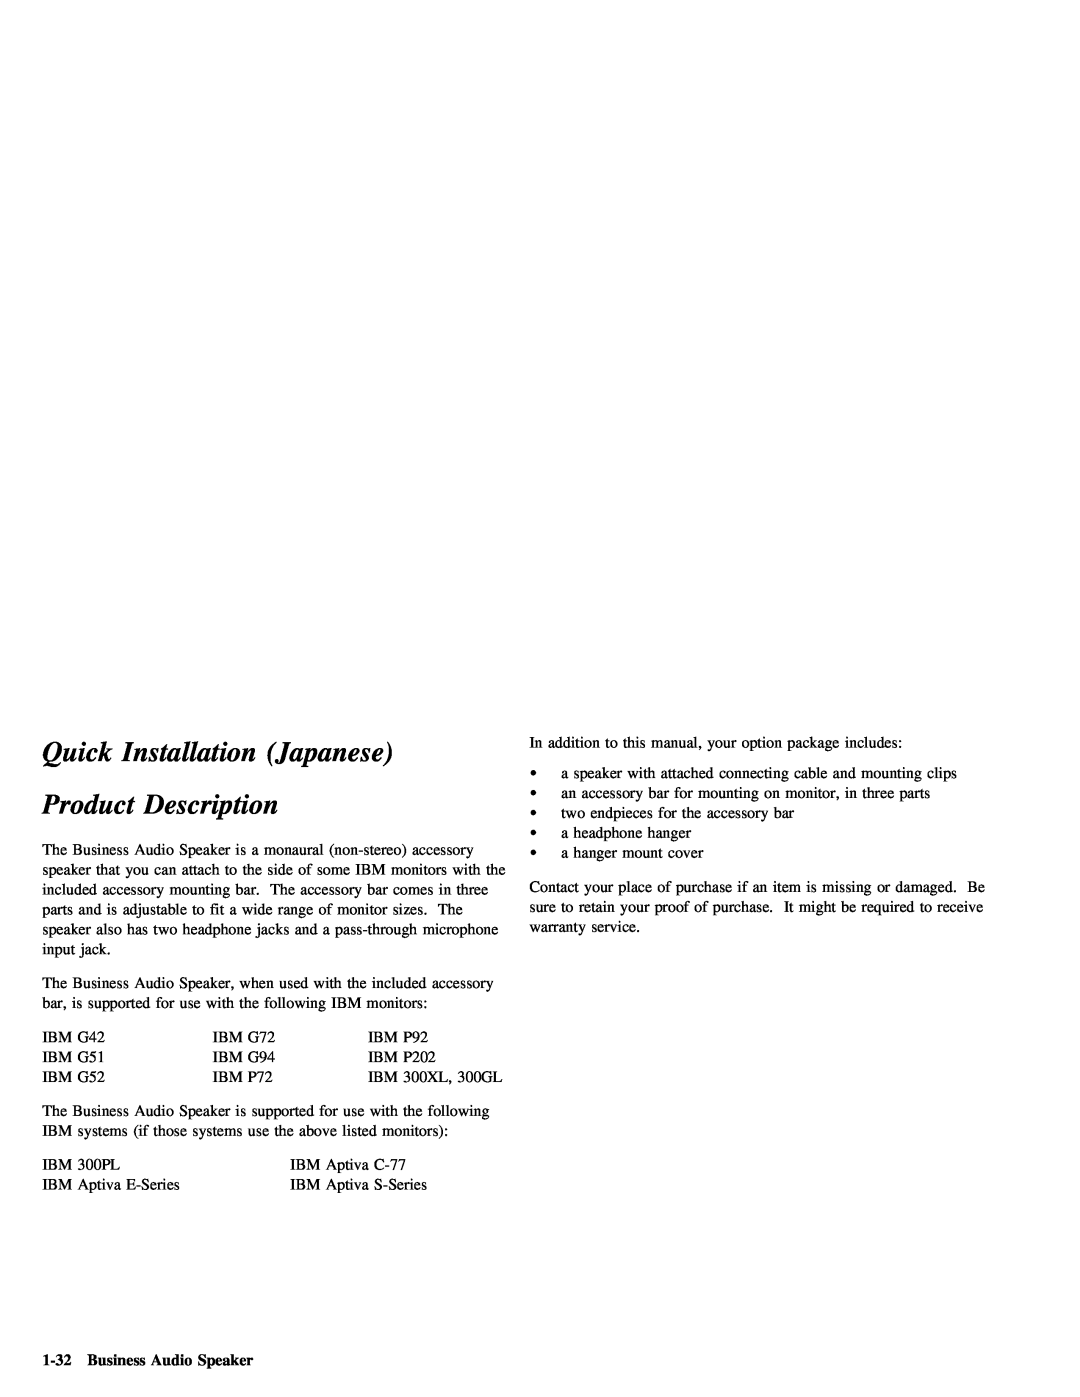 IBM 05L1596 manual Quick Installation Japanese, 1-32Business Audio Speaker, Description, Product 